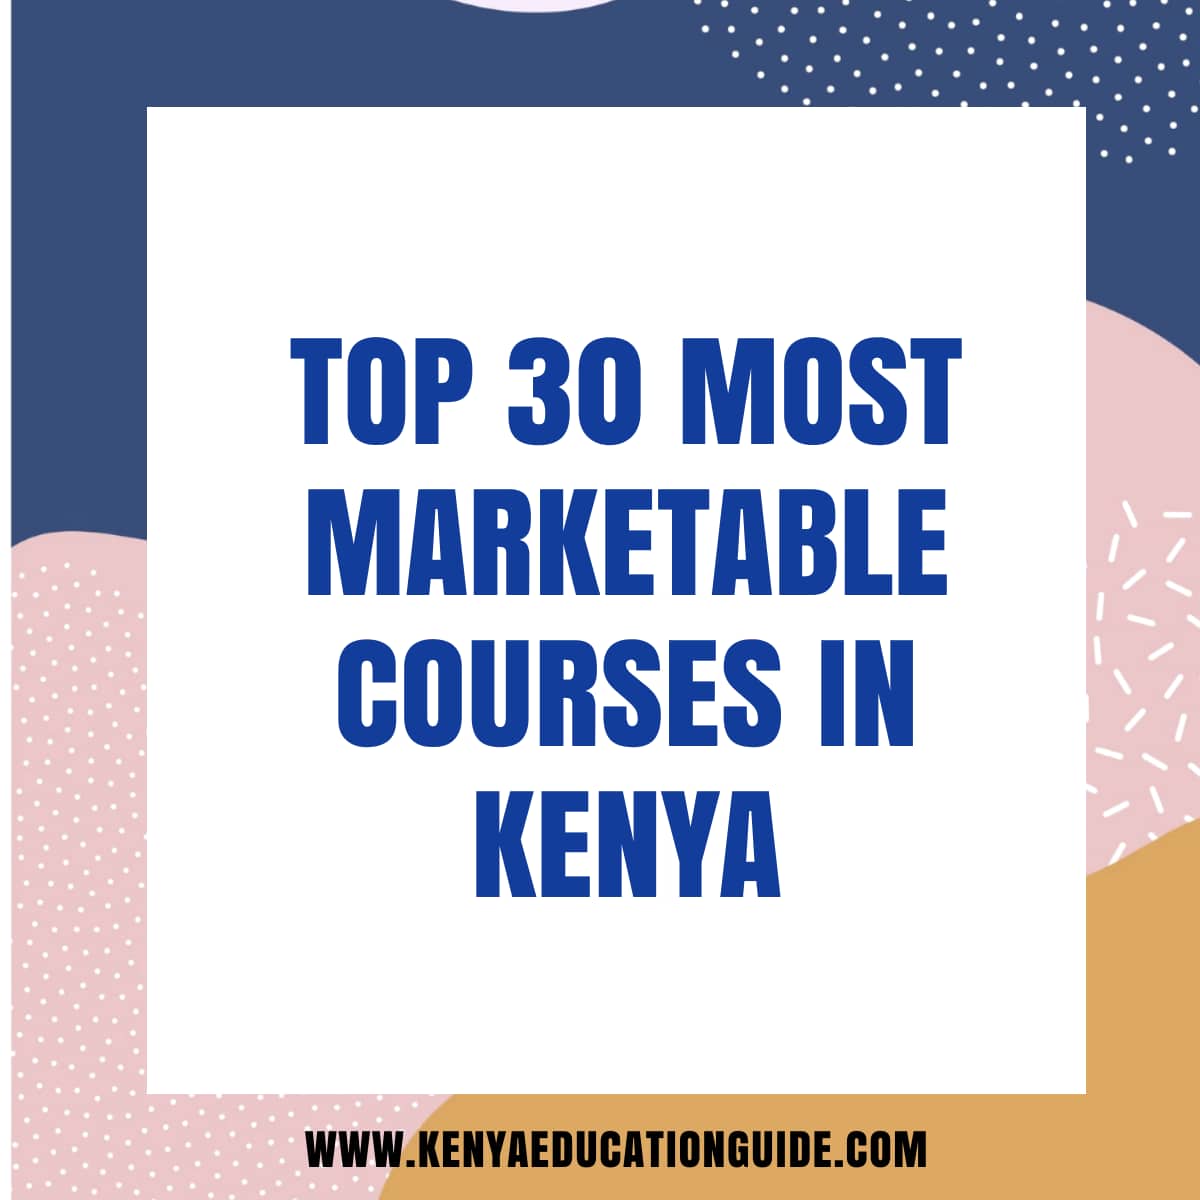 Top 30 Most Marketable Courses in Kenya